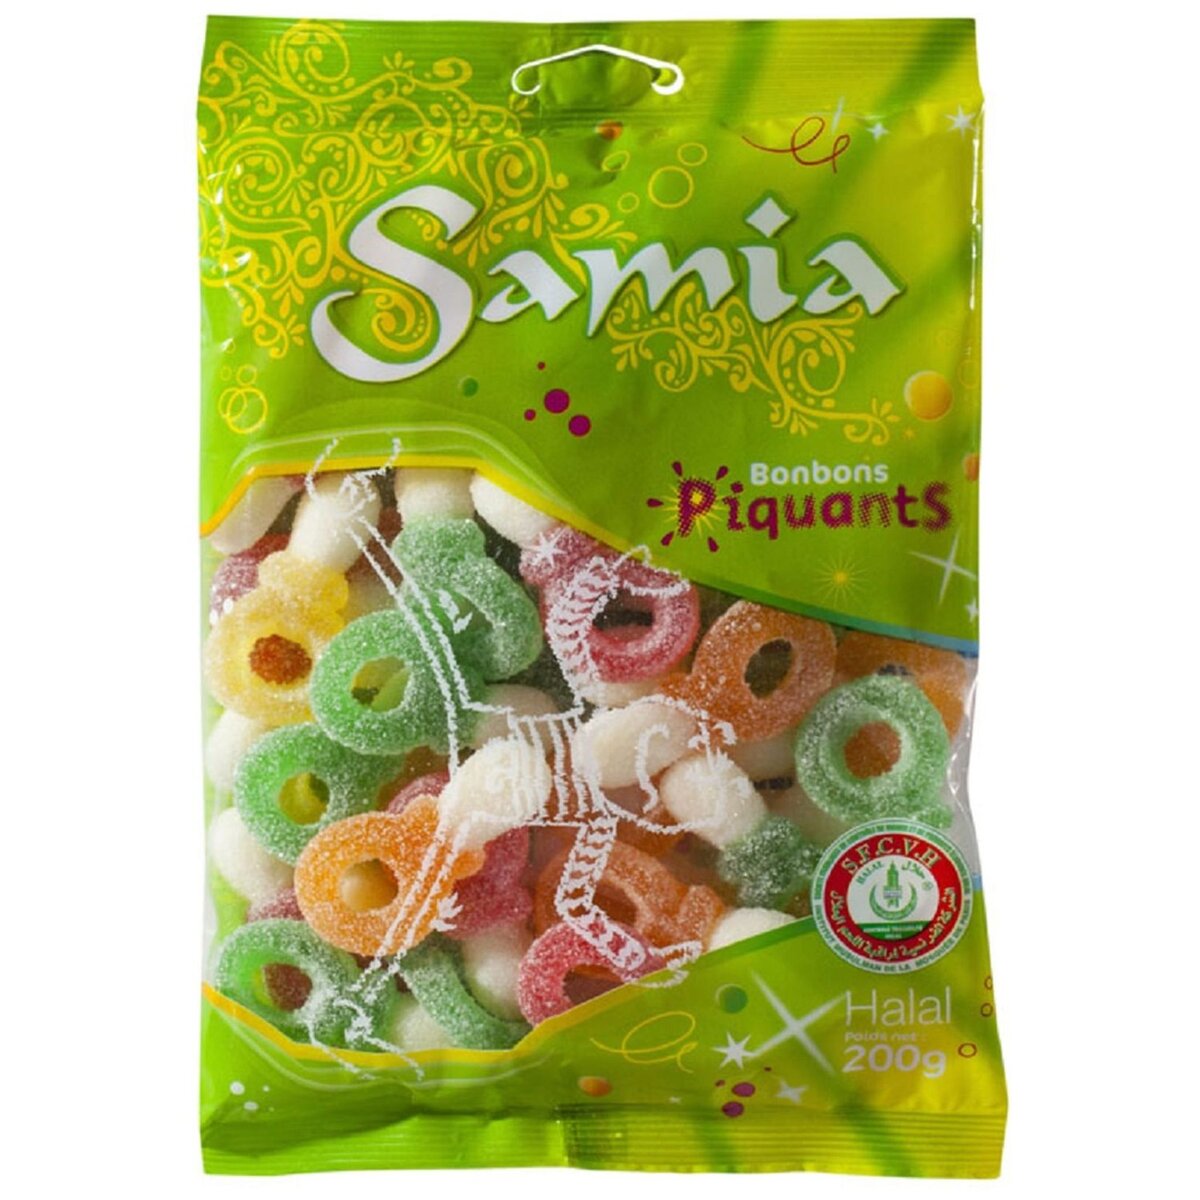 SAMIA Samia bonbon halal tétines piquantes sachet 200g pas cher 